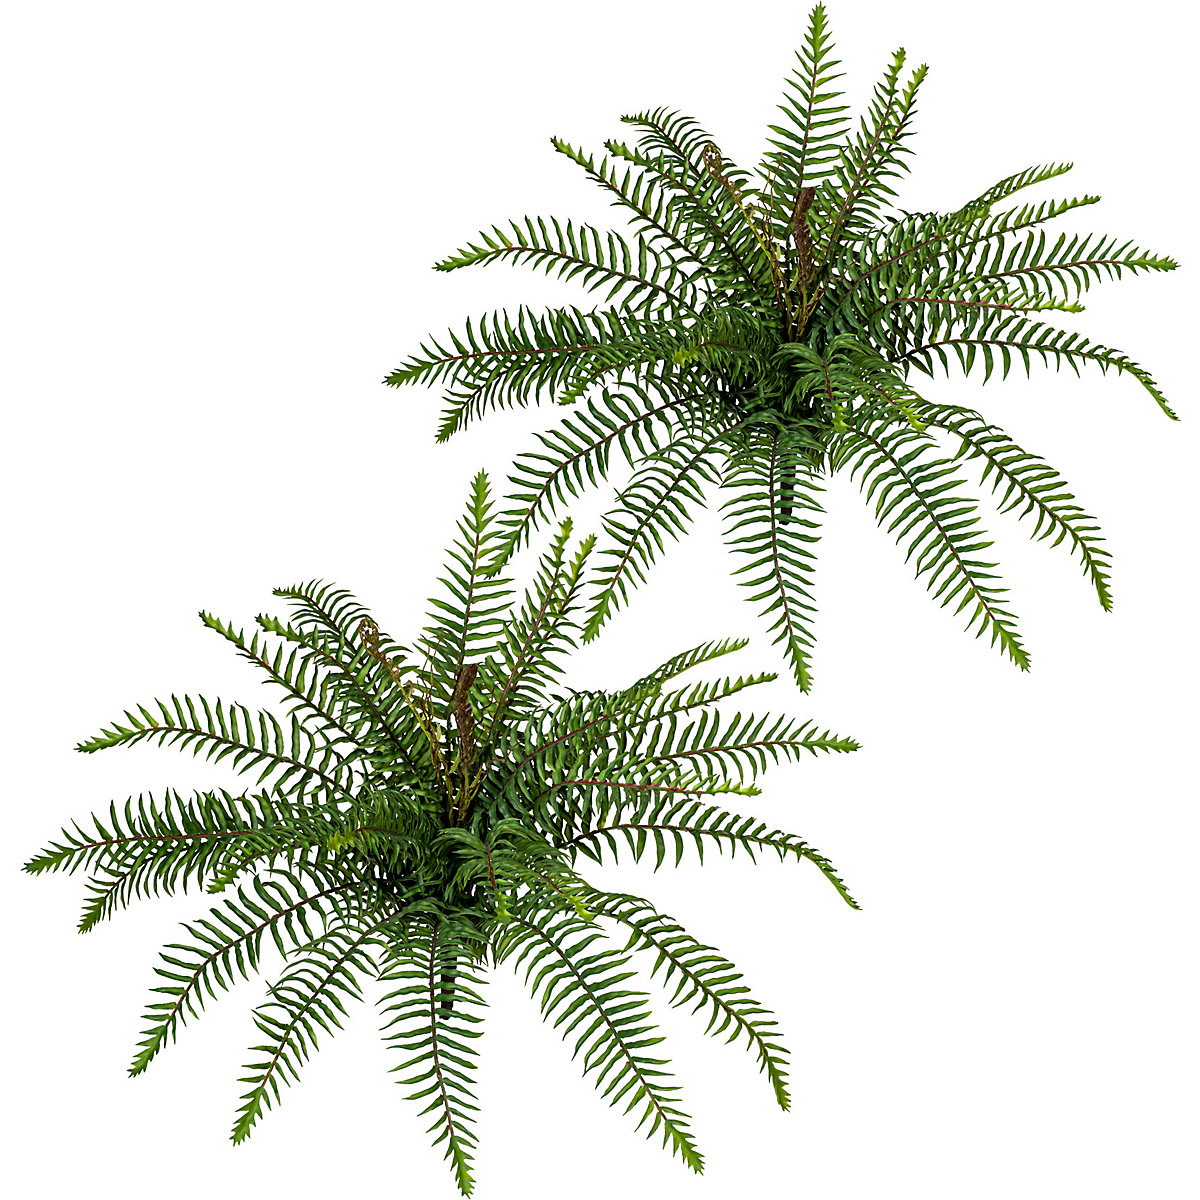 Wild fern bush